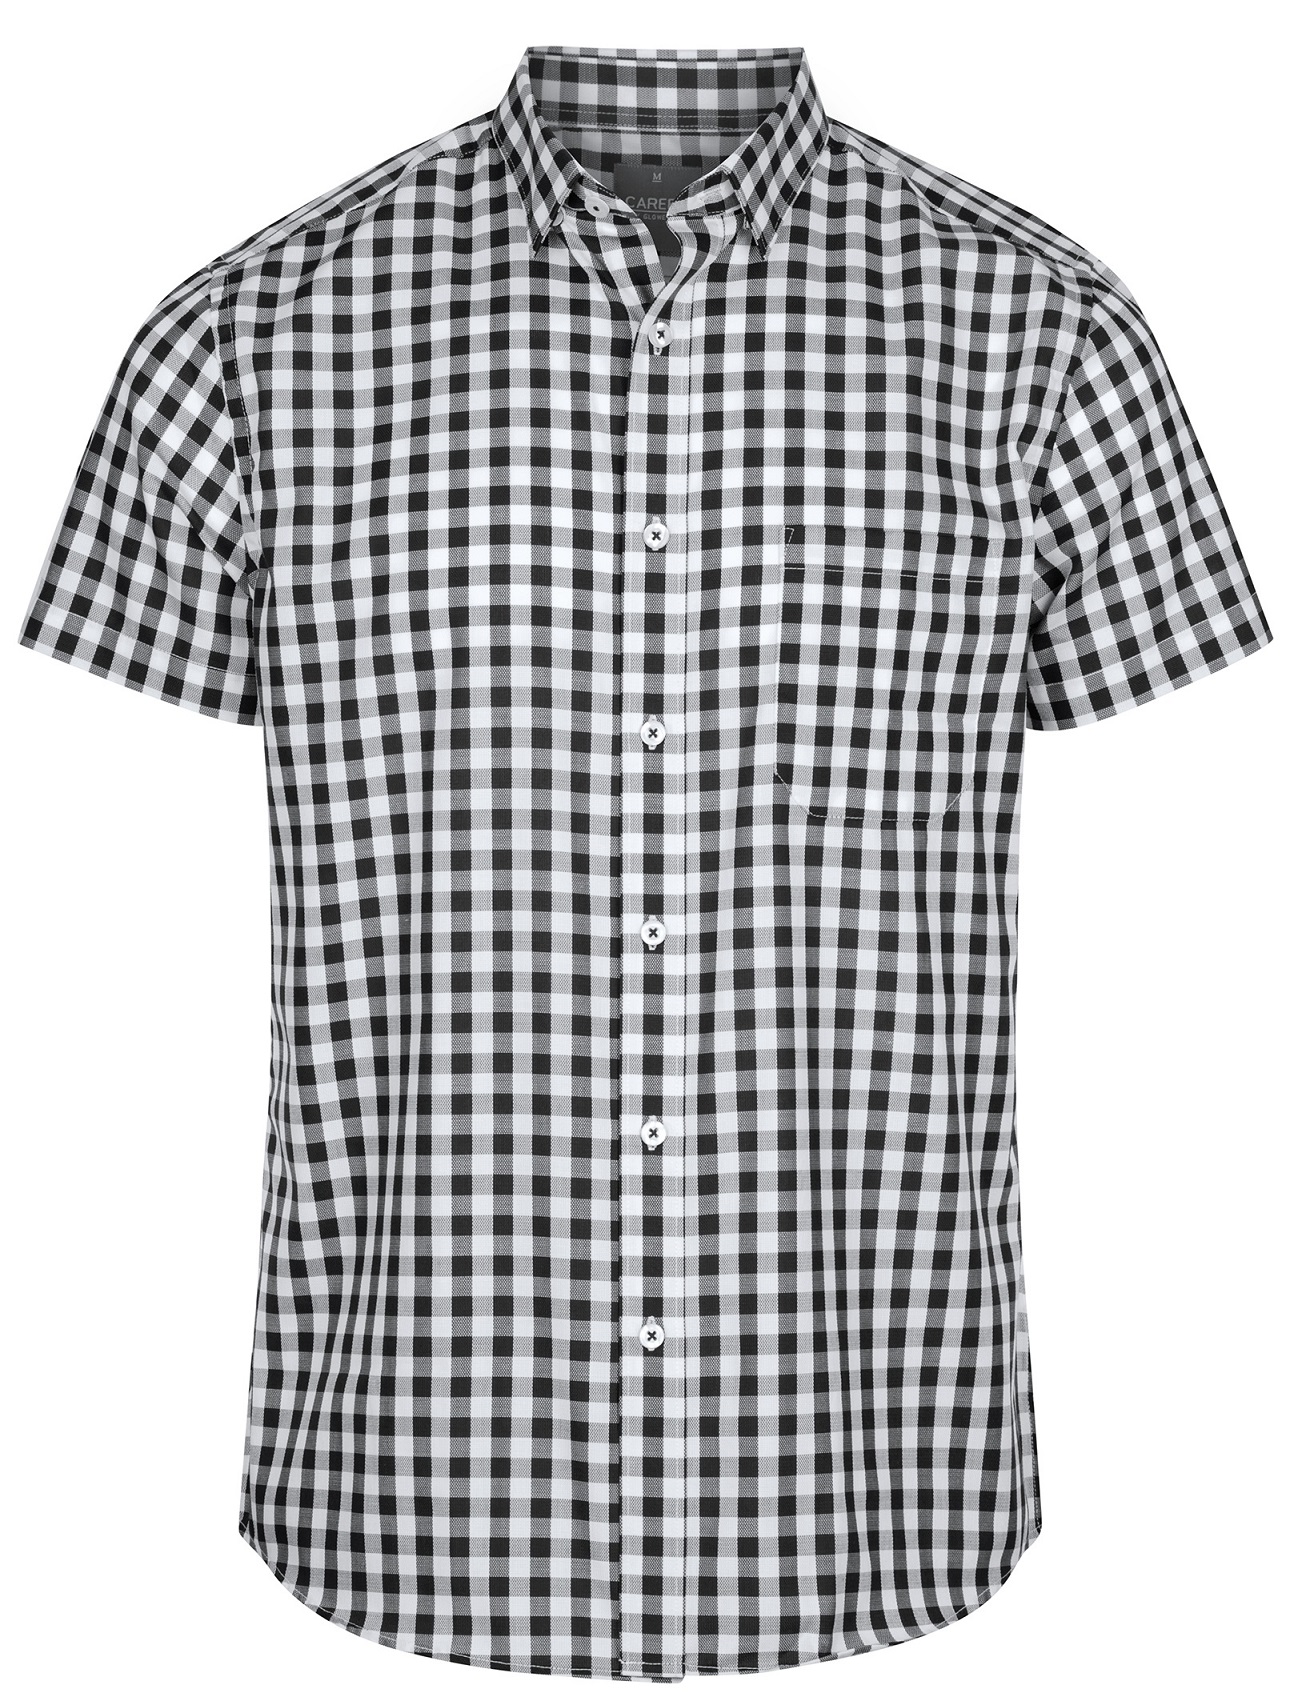 Mens Short Sleeve Gingham Check Shirt Slim Fit by Gloweave